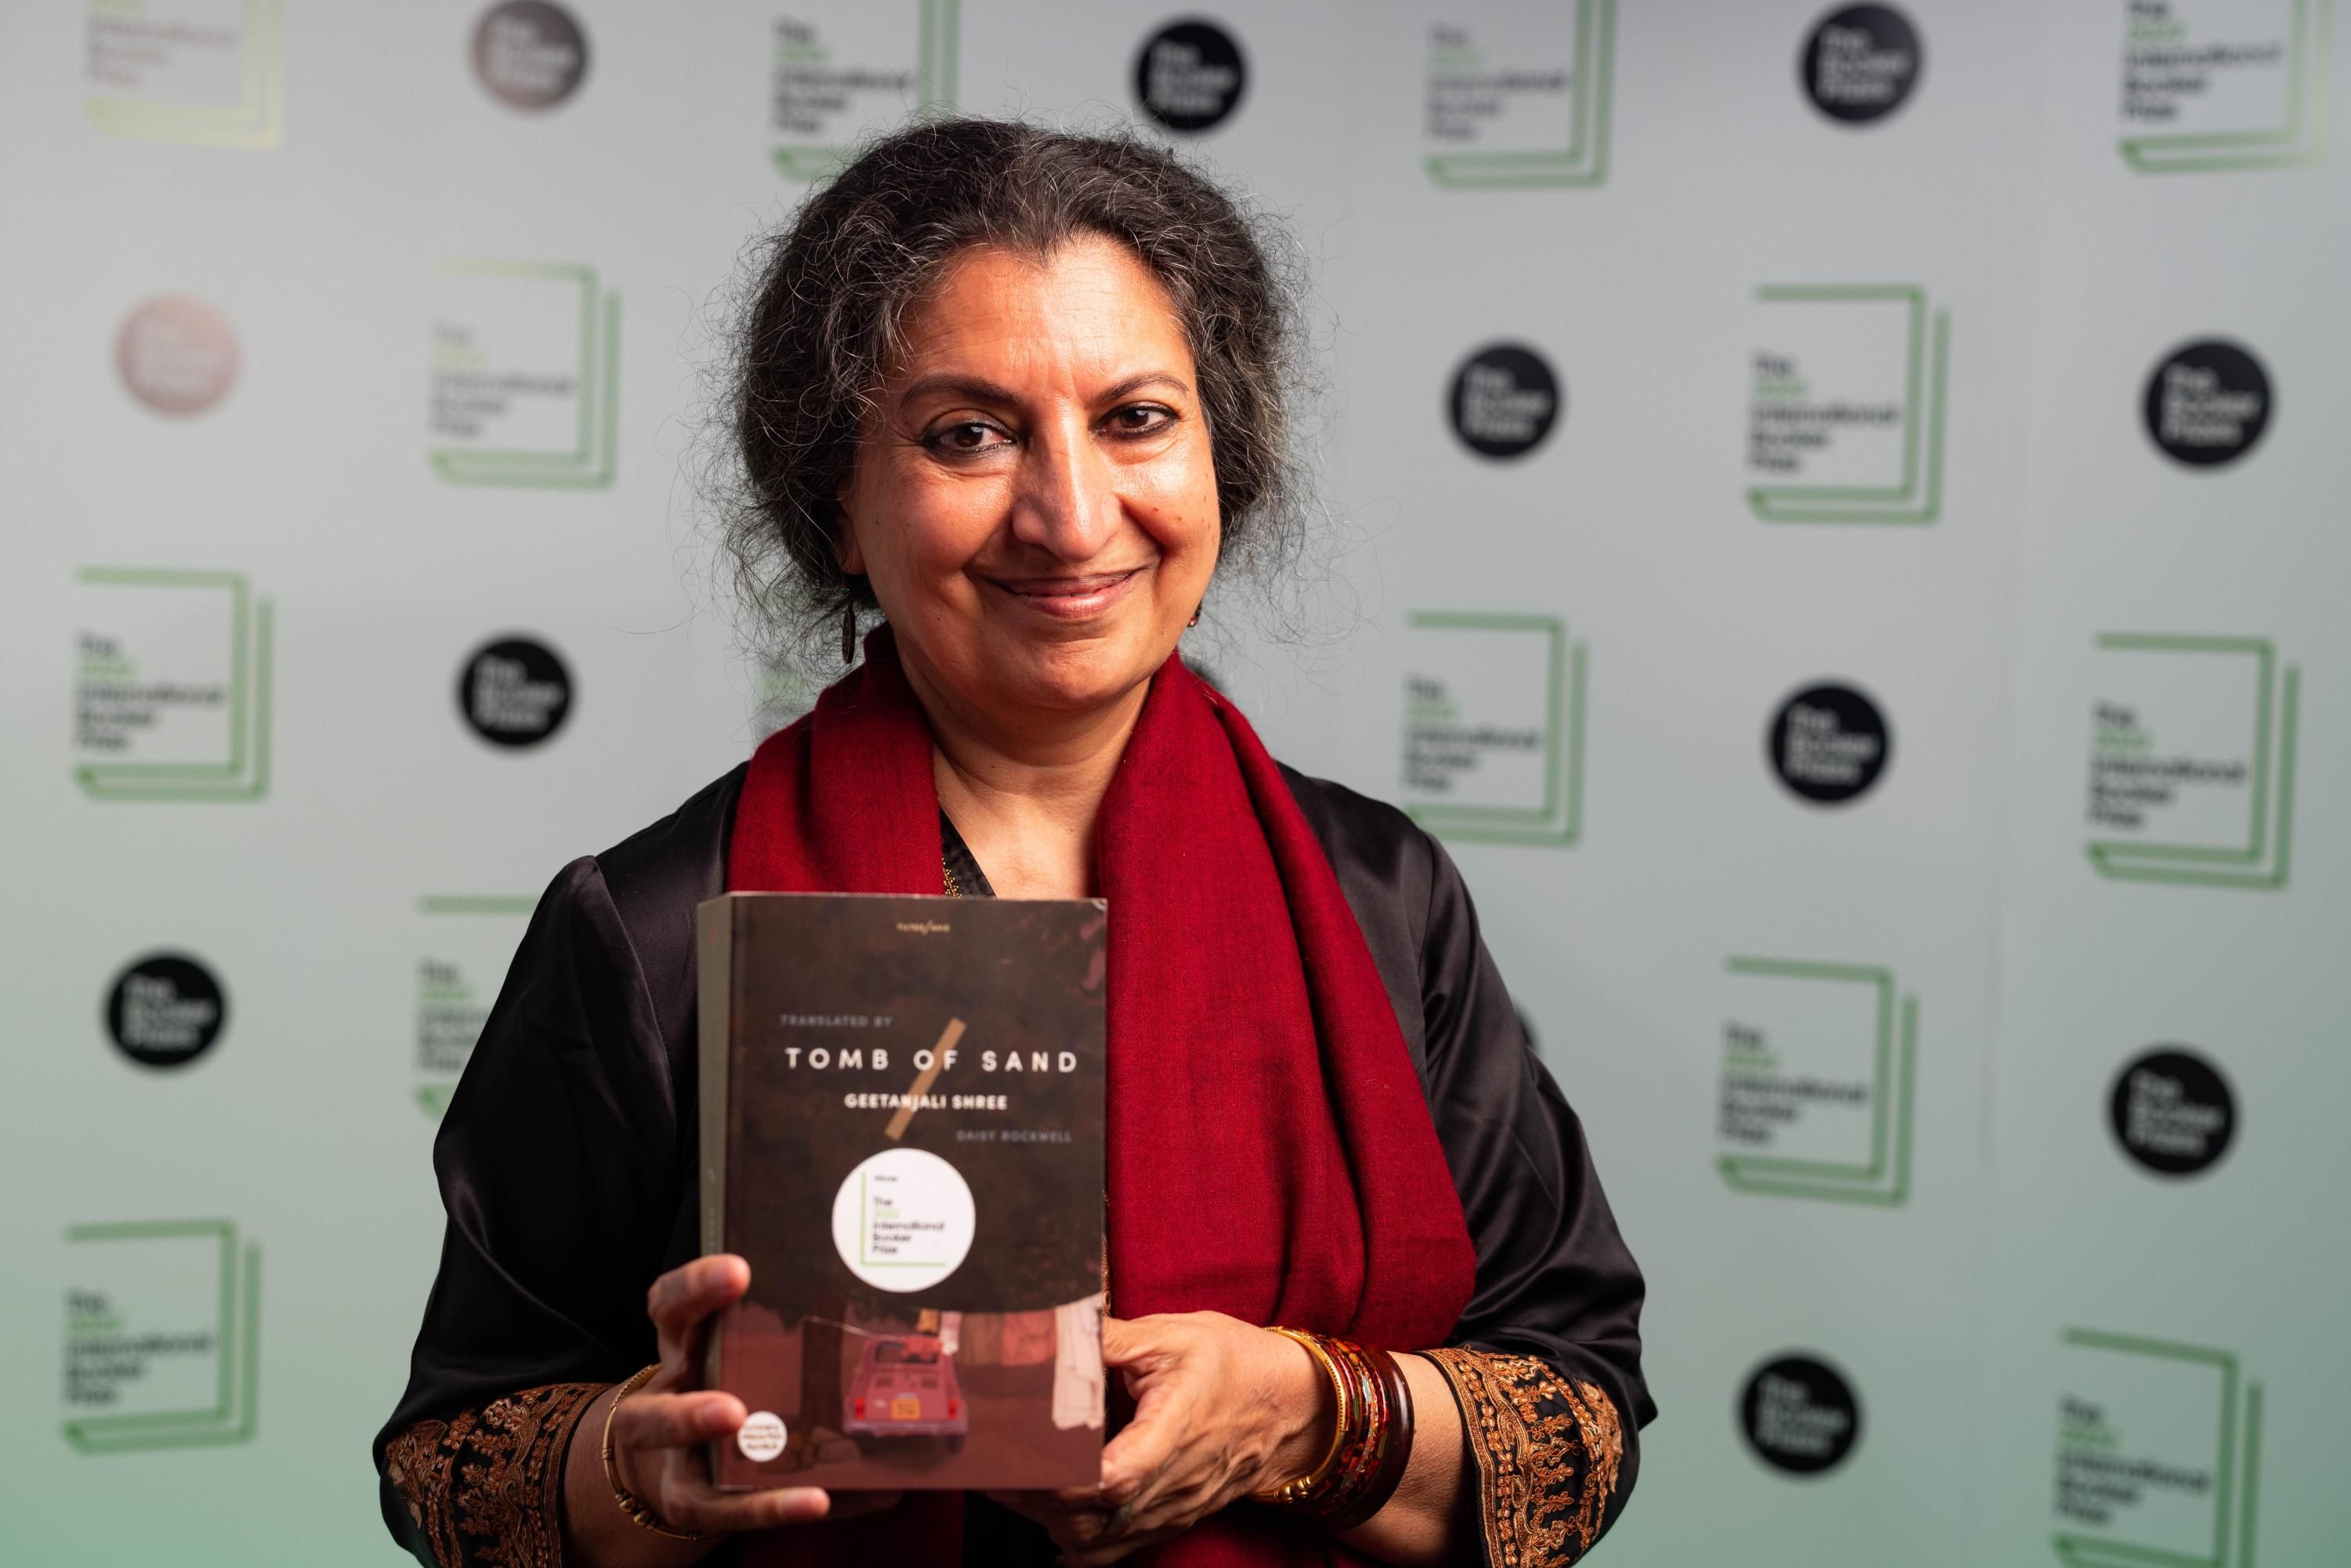 geetanjali shree: Booker Prize for Geetanjali Shree's 'Tomb of